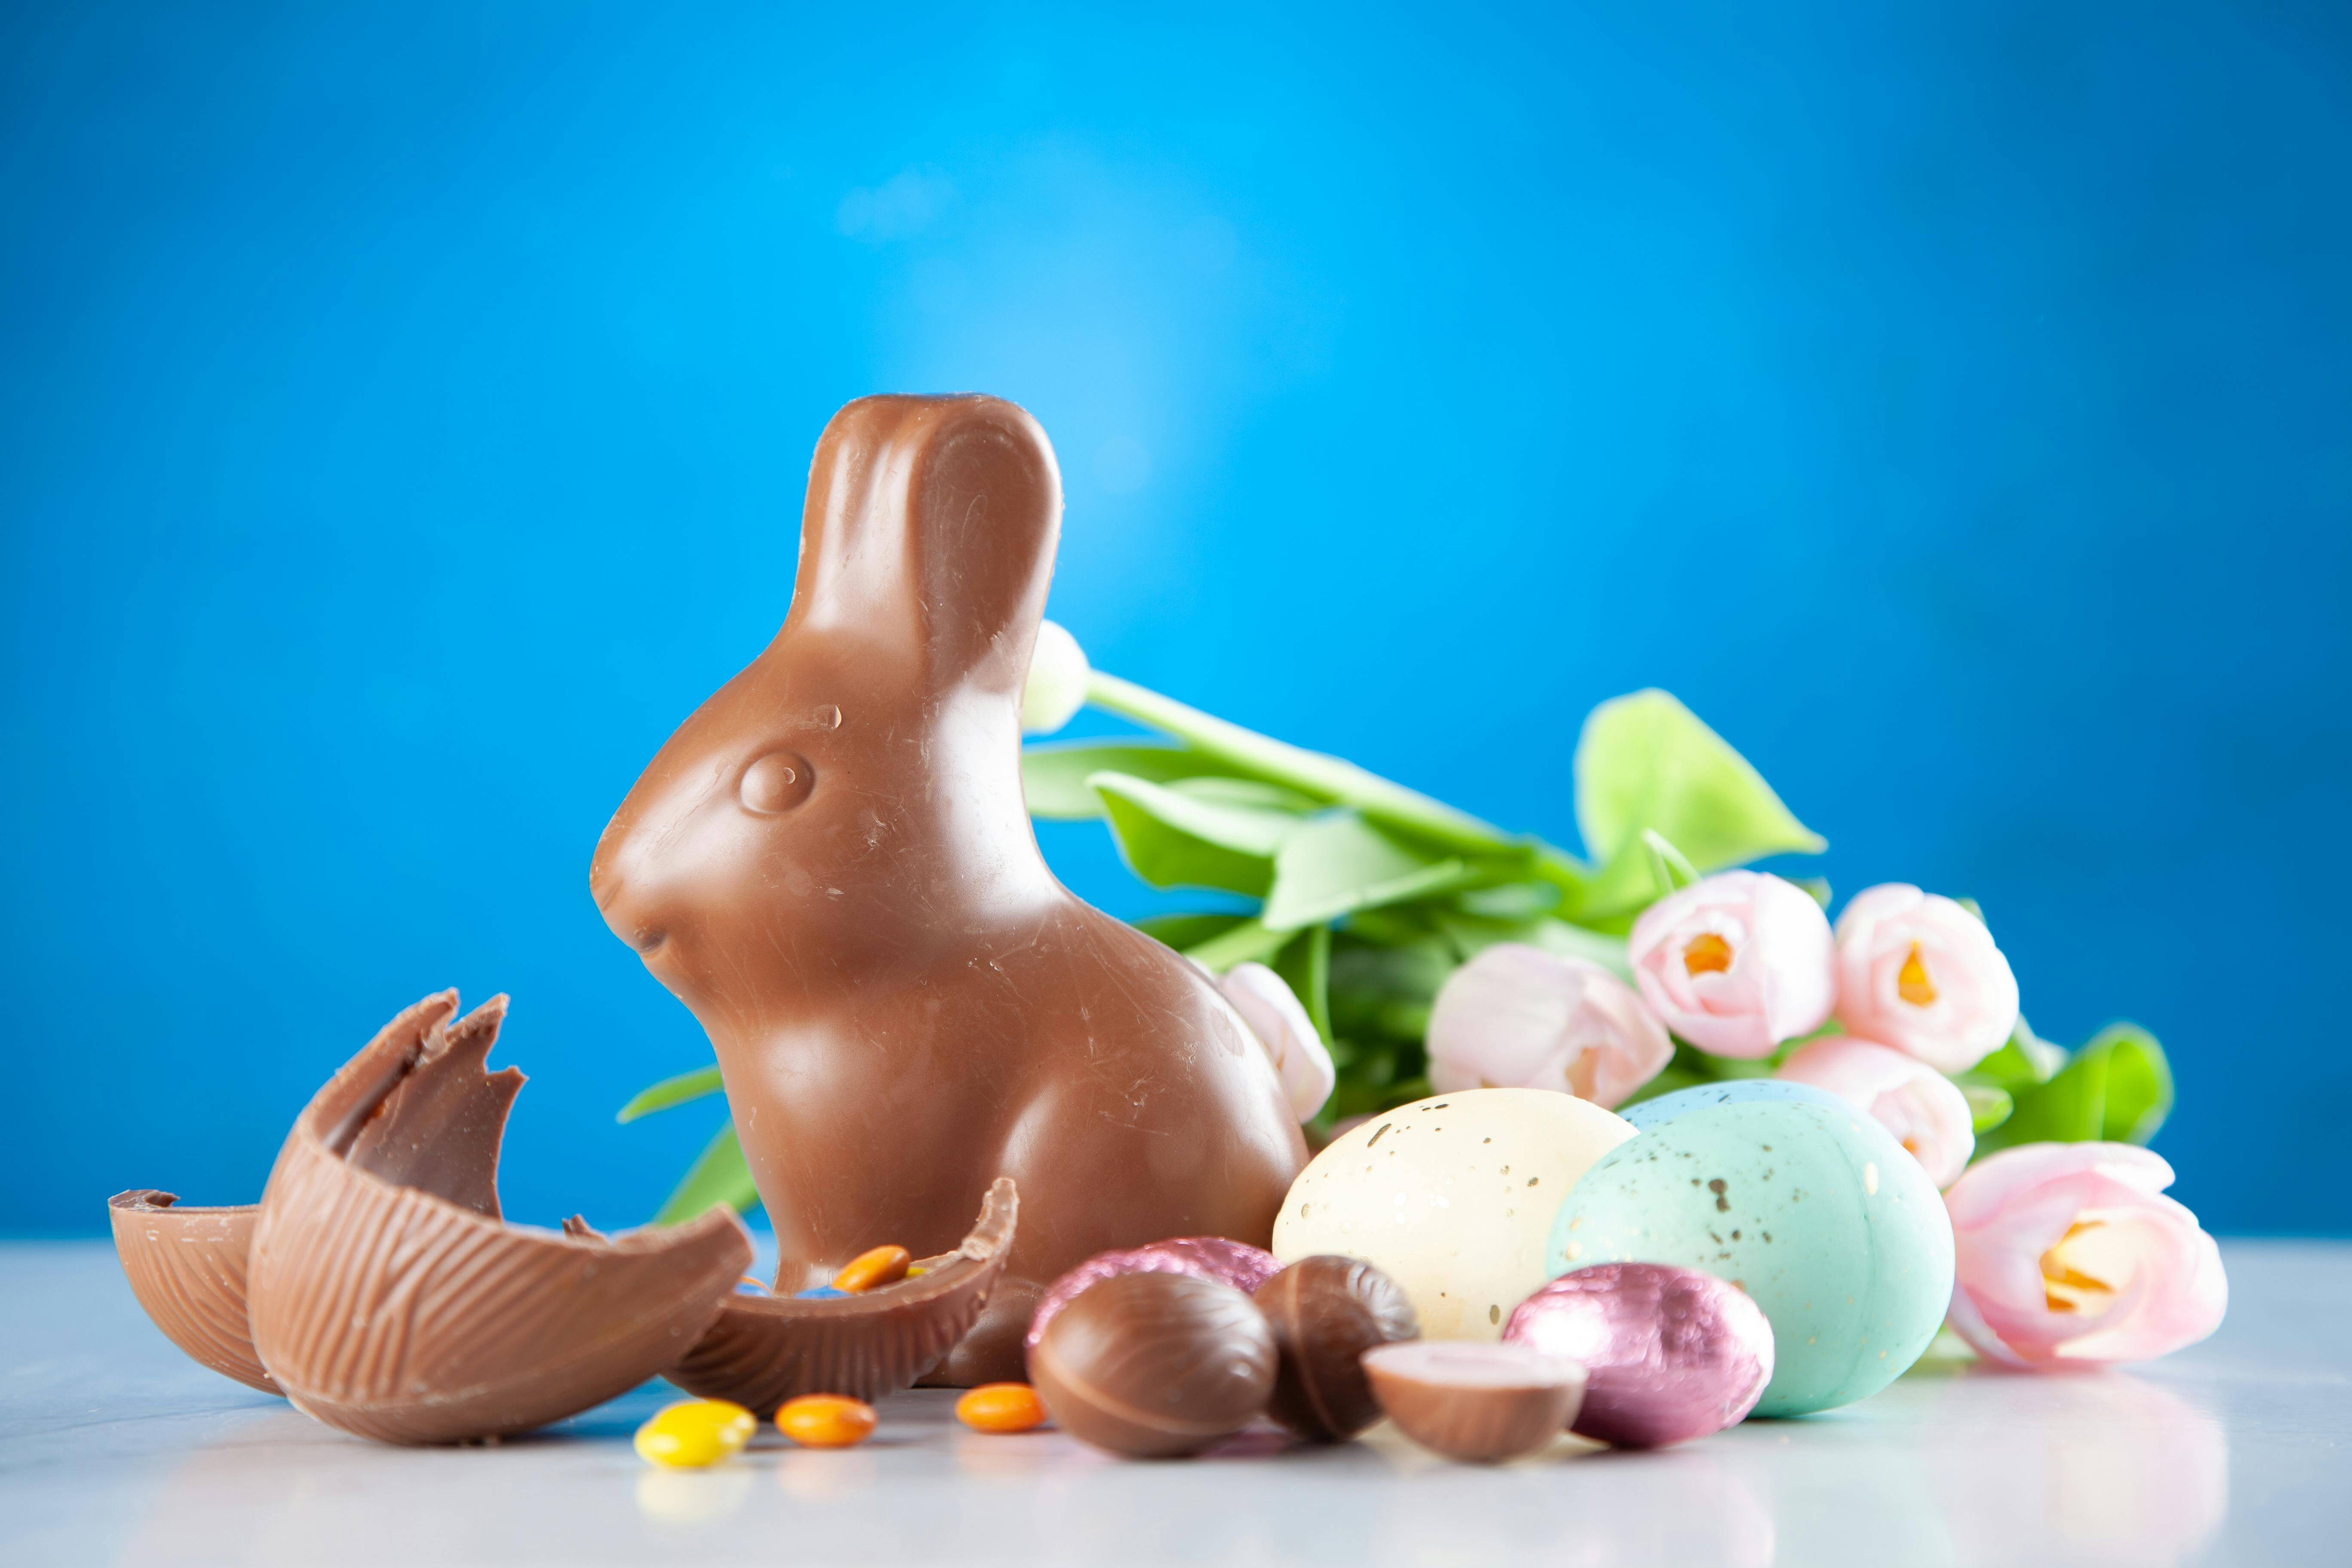 Featured image for “Ensuring a Safe and Joyful Easter Egg Hunt: 4 Essential Tips”